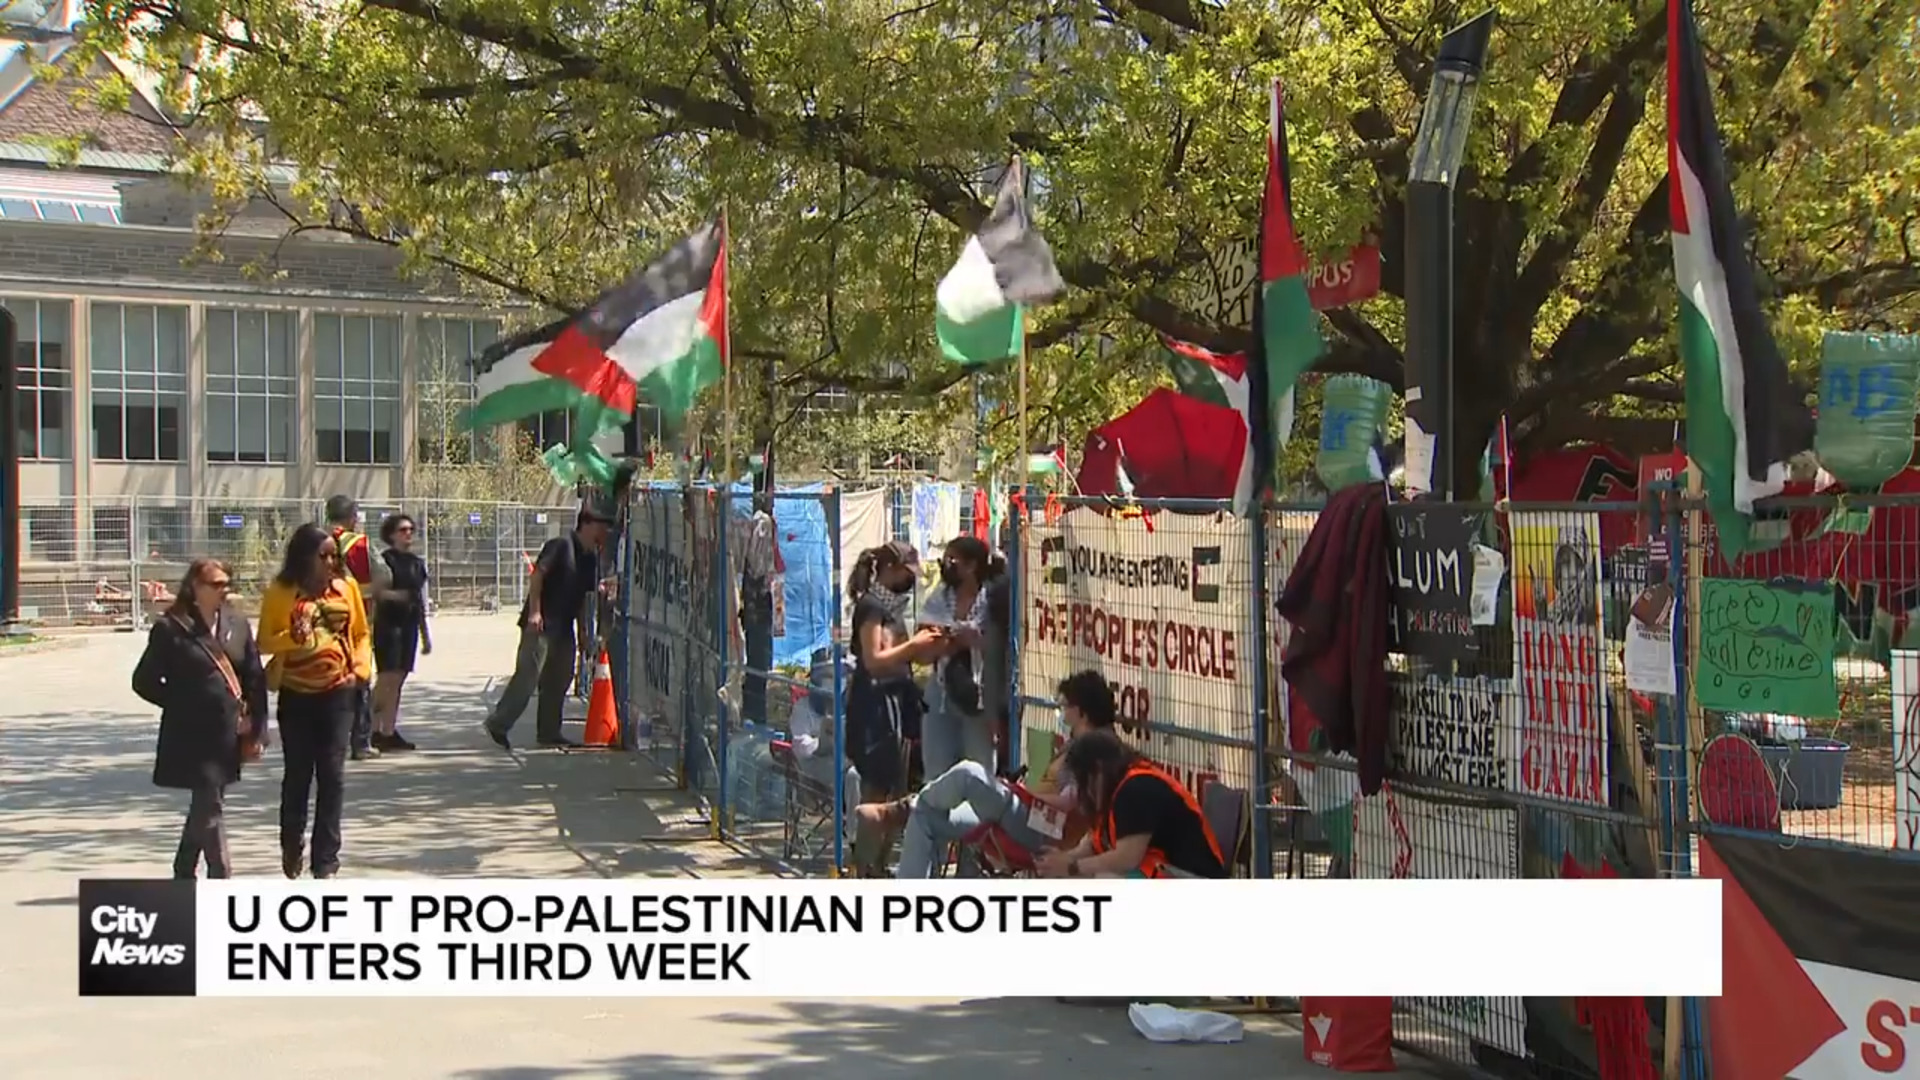 U of T pro-Palestinian encampment enters 3rd week as negotiations continue